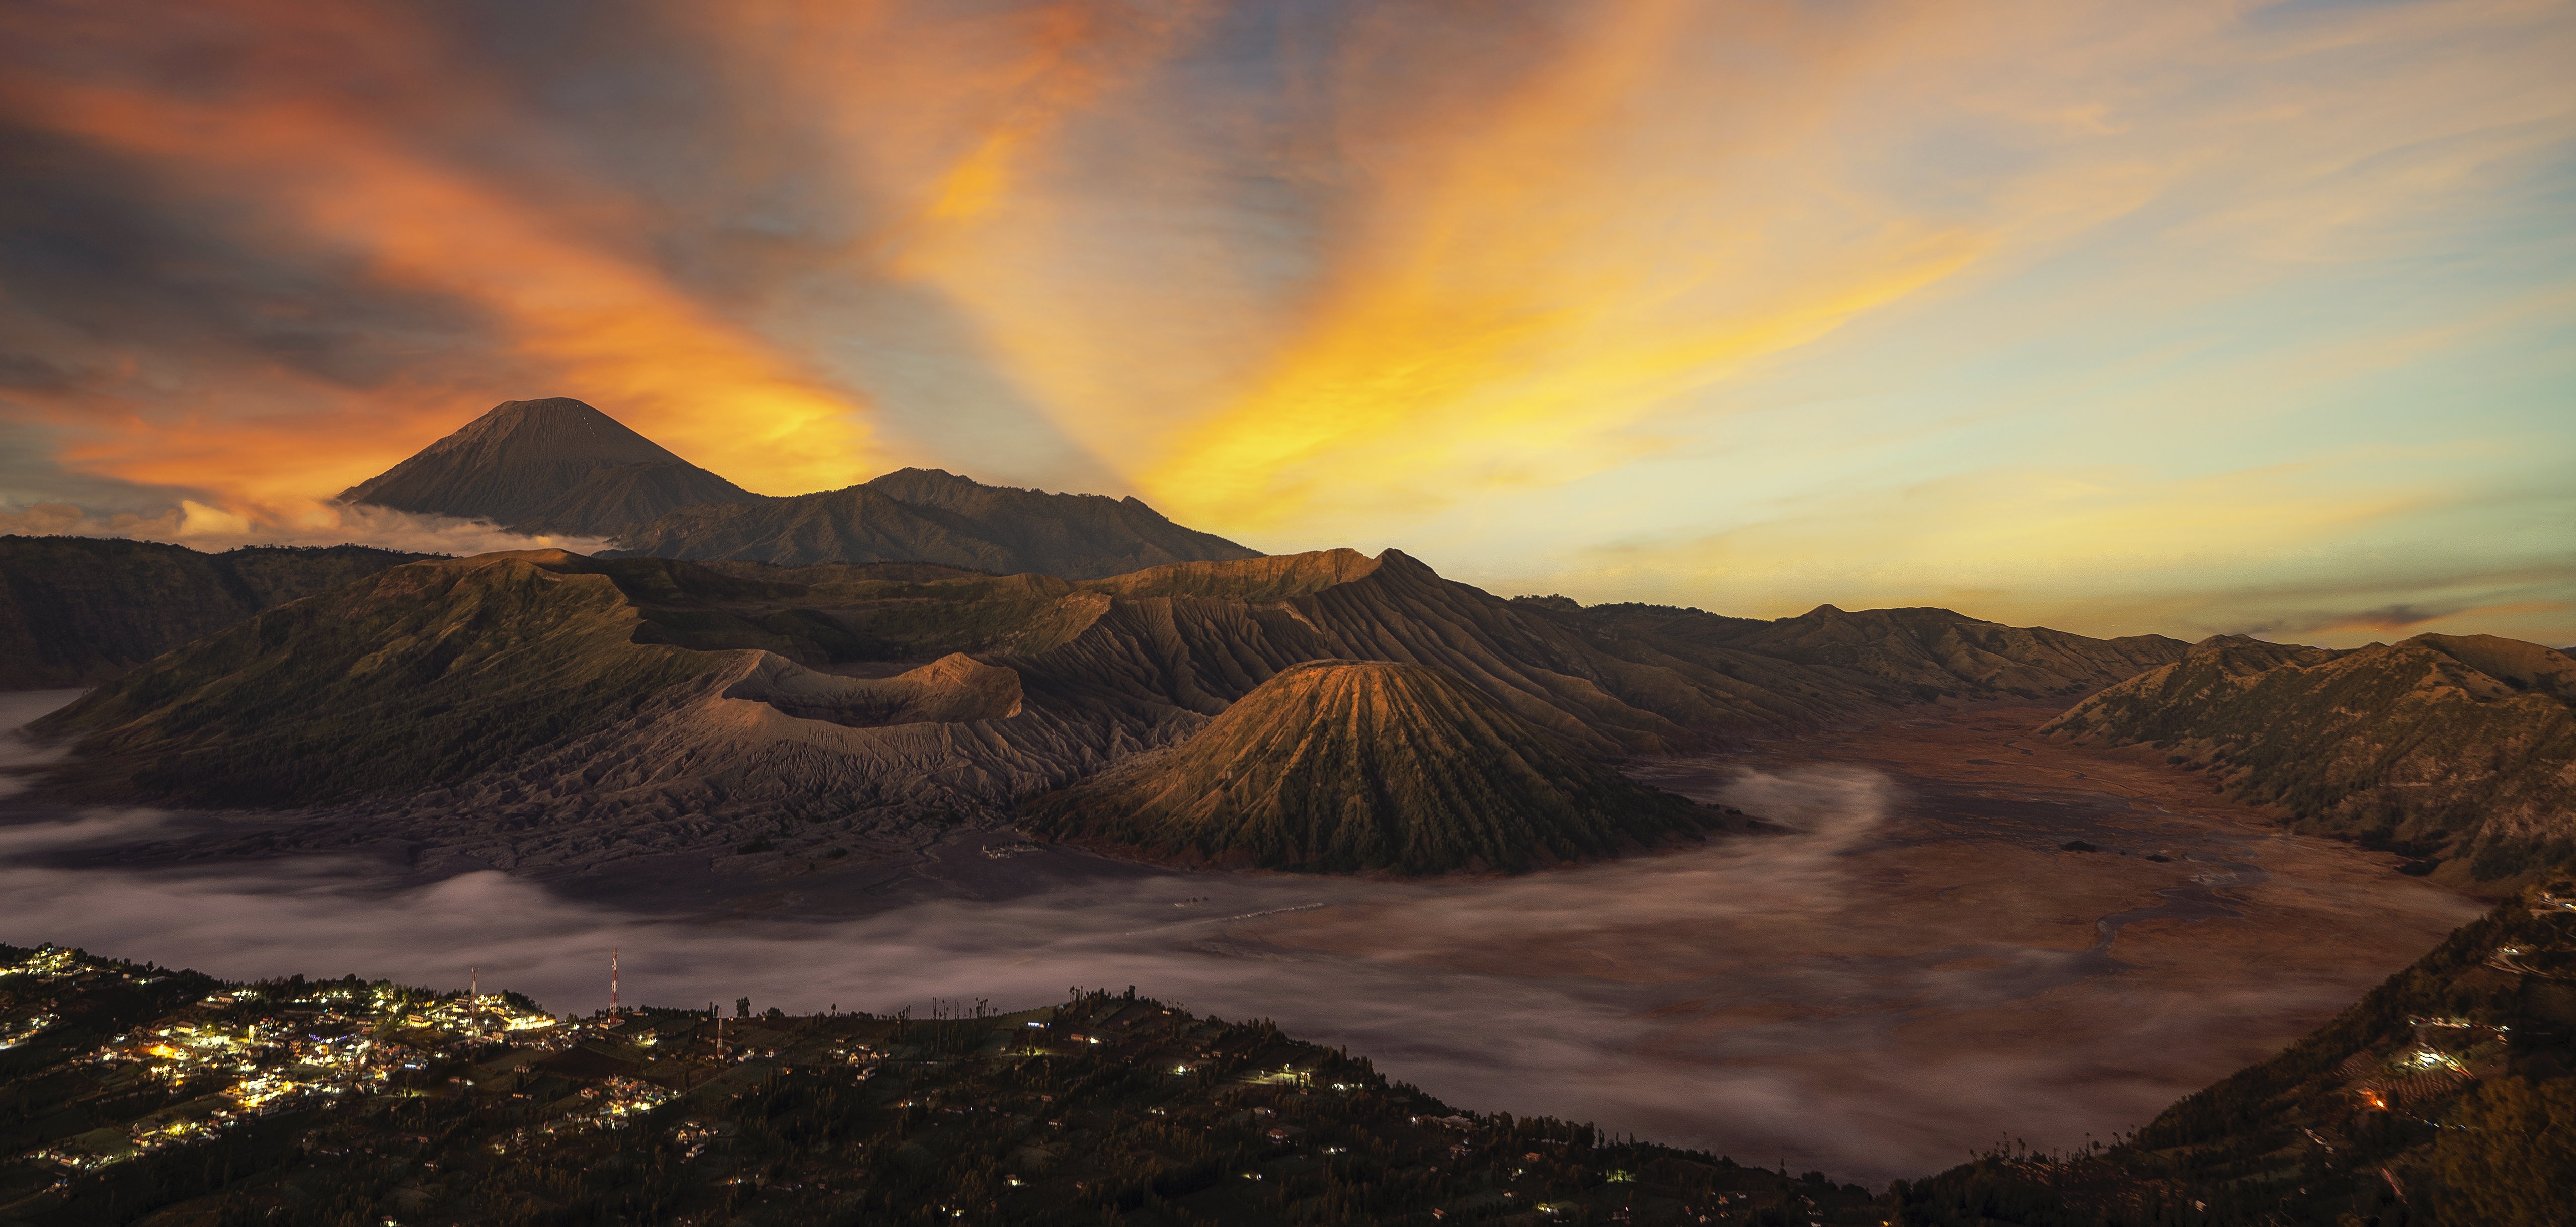 990476 Hintergrundbild herunterladen fotografie, landschaft, indonesien, insel, java (indonesien), berg bromo, gebirge, panorama, vulkan - Bildschirmschoner und Bilder kostenlos